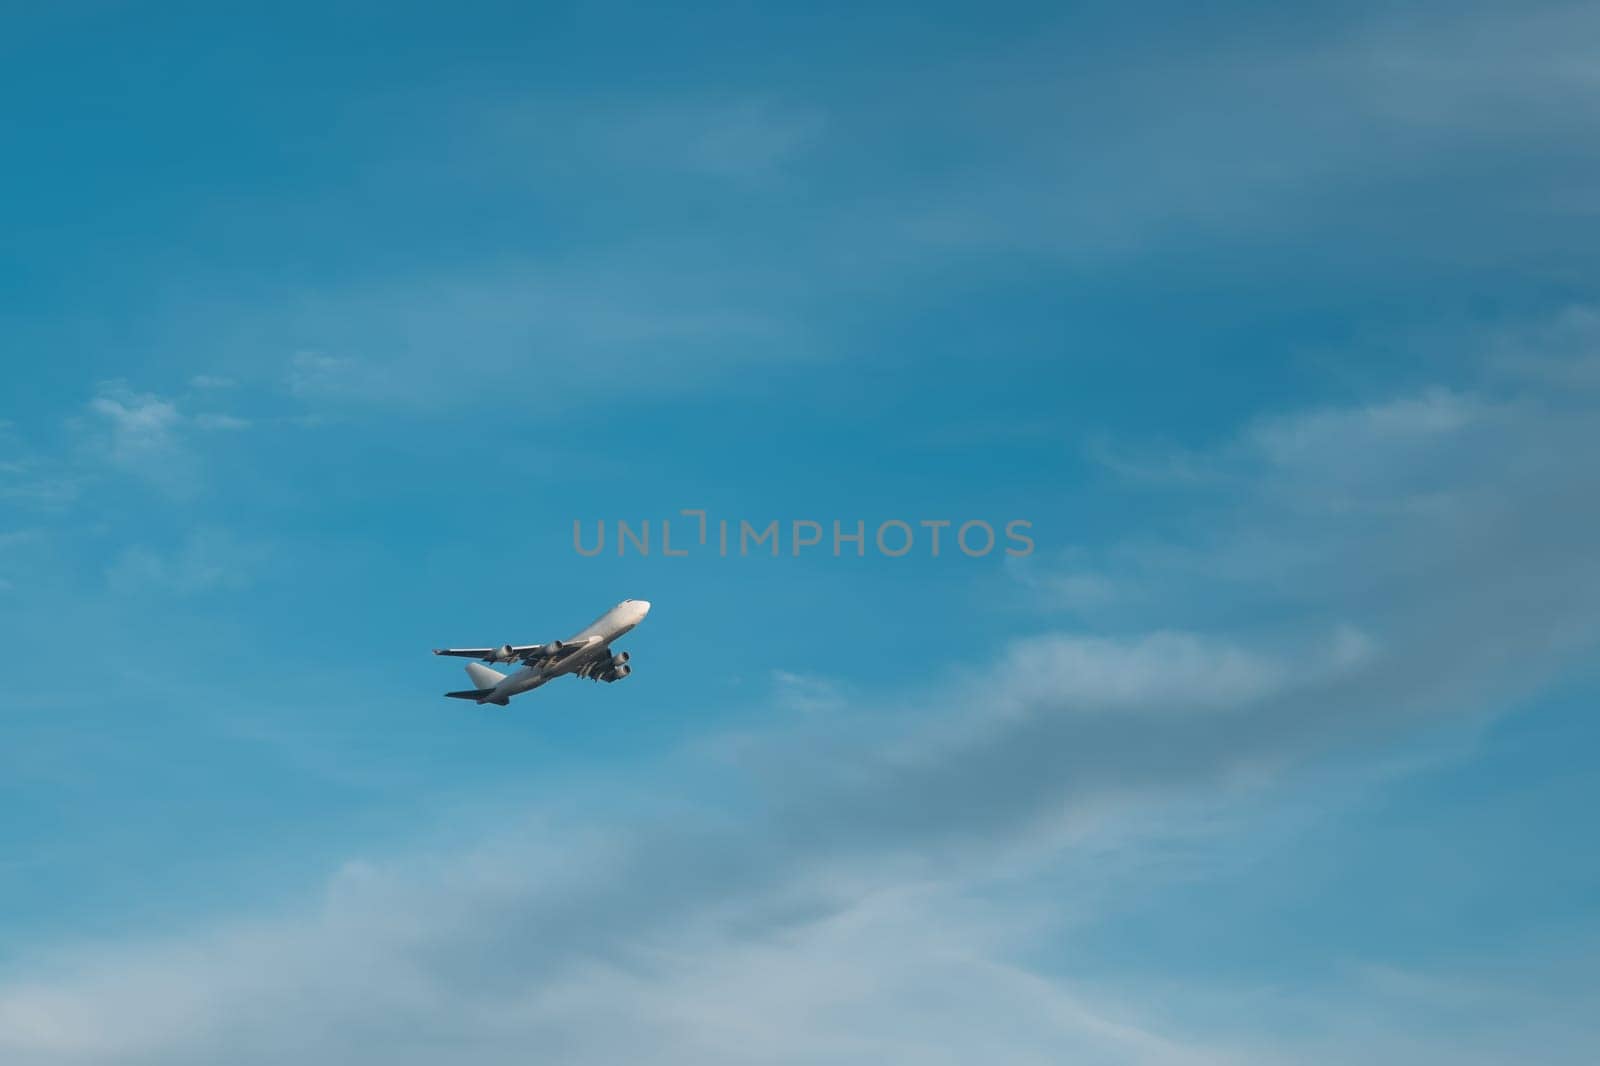 Airplane flies gaining altitude in blue sky in prescribed direction by apavlin